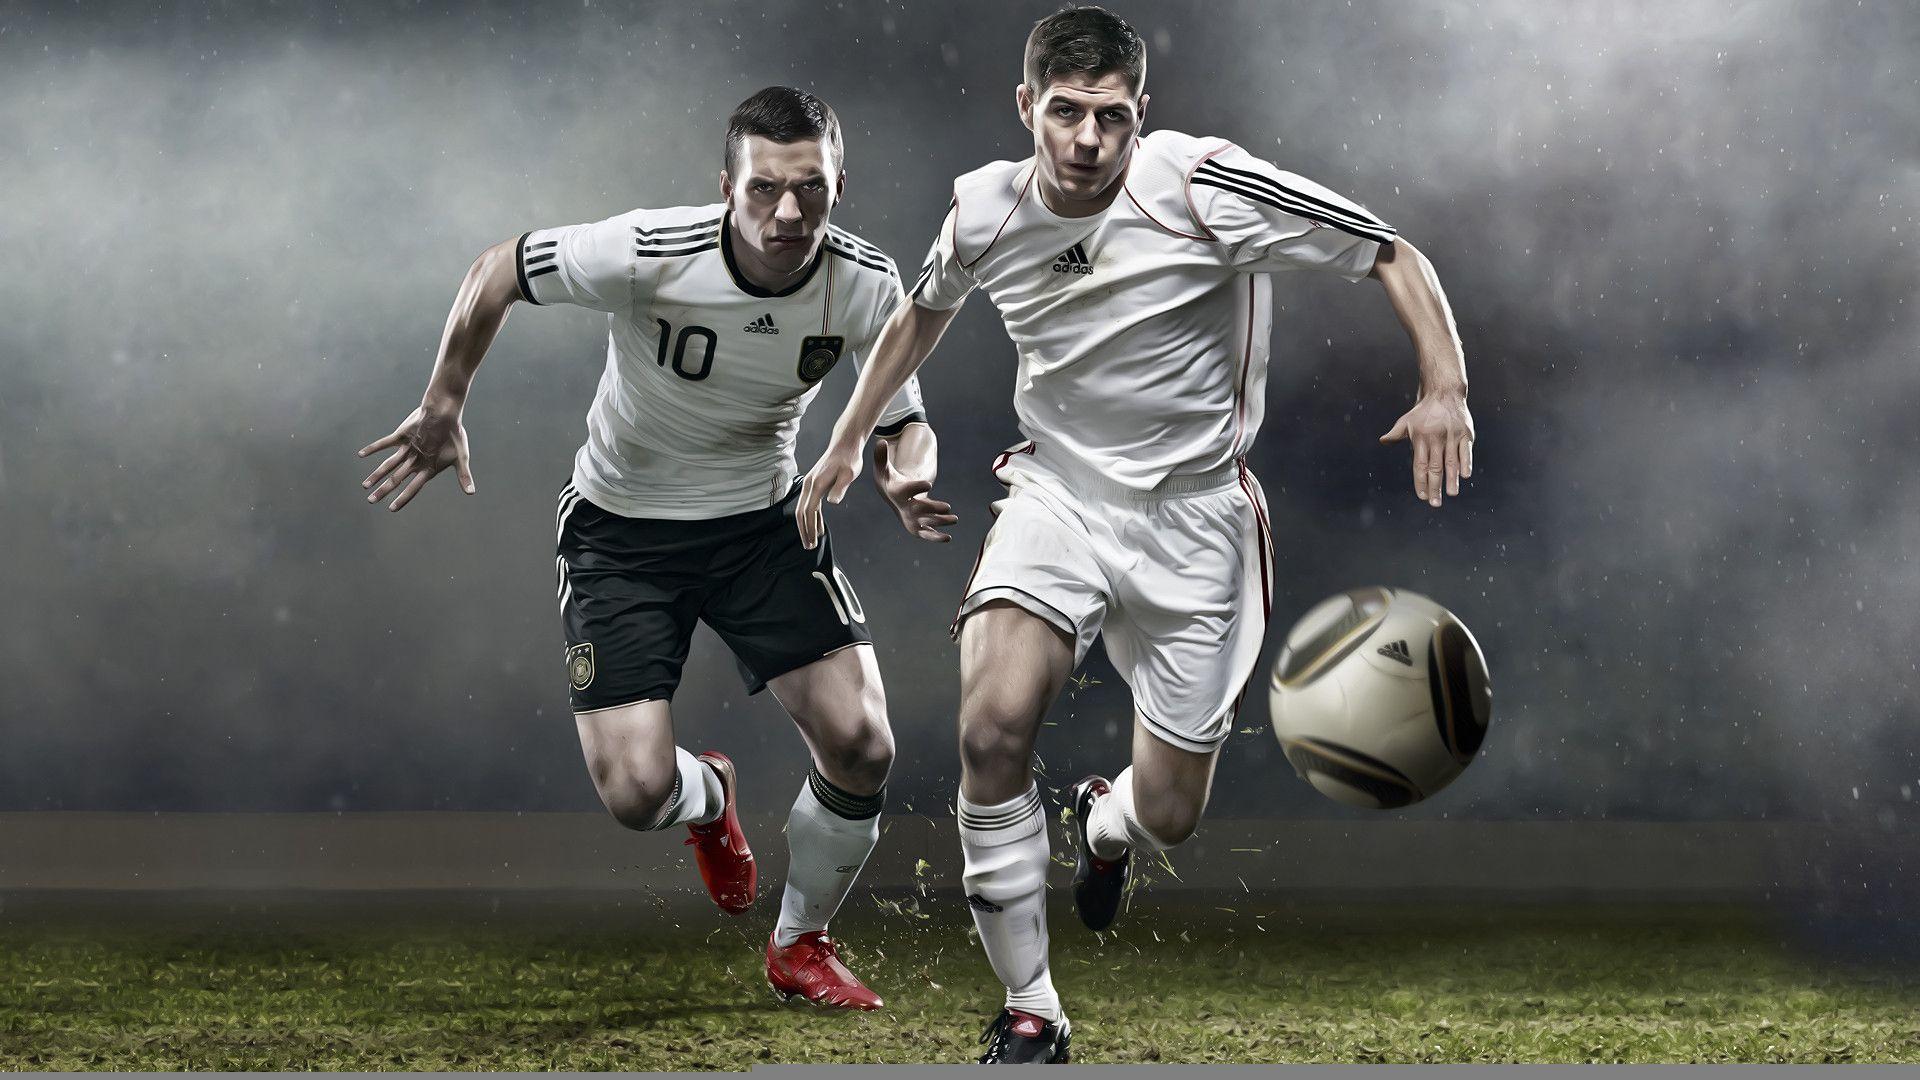 Free Adidas Soccer Wallpaper 1080p